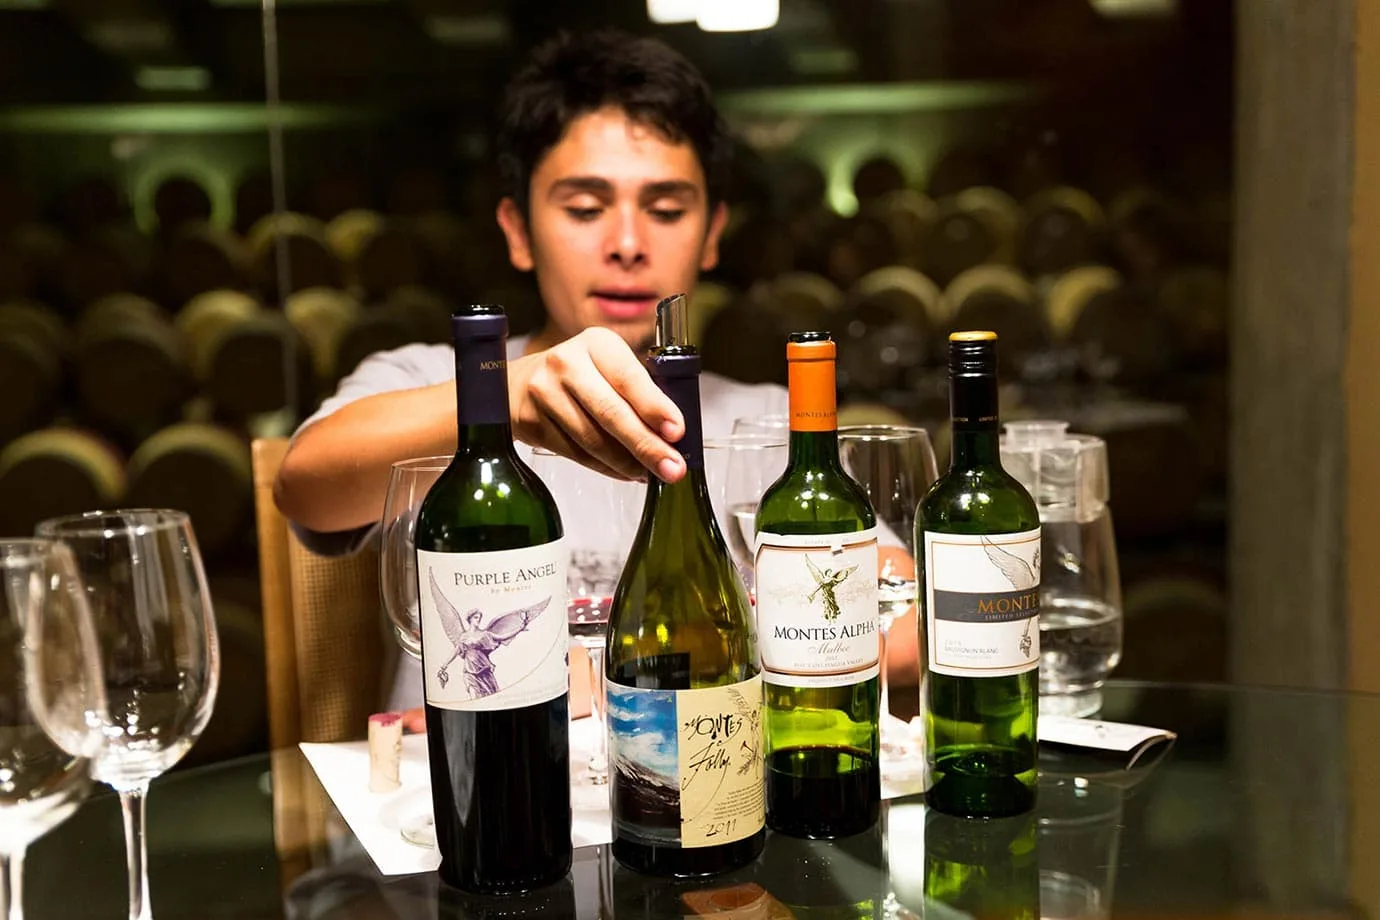 Wine tasting at Montes, Chile